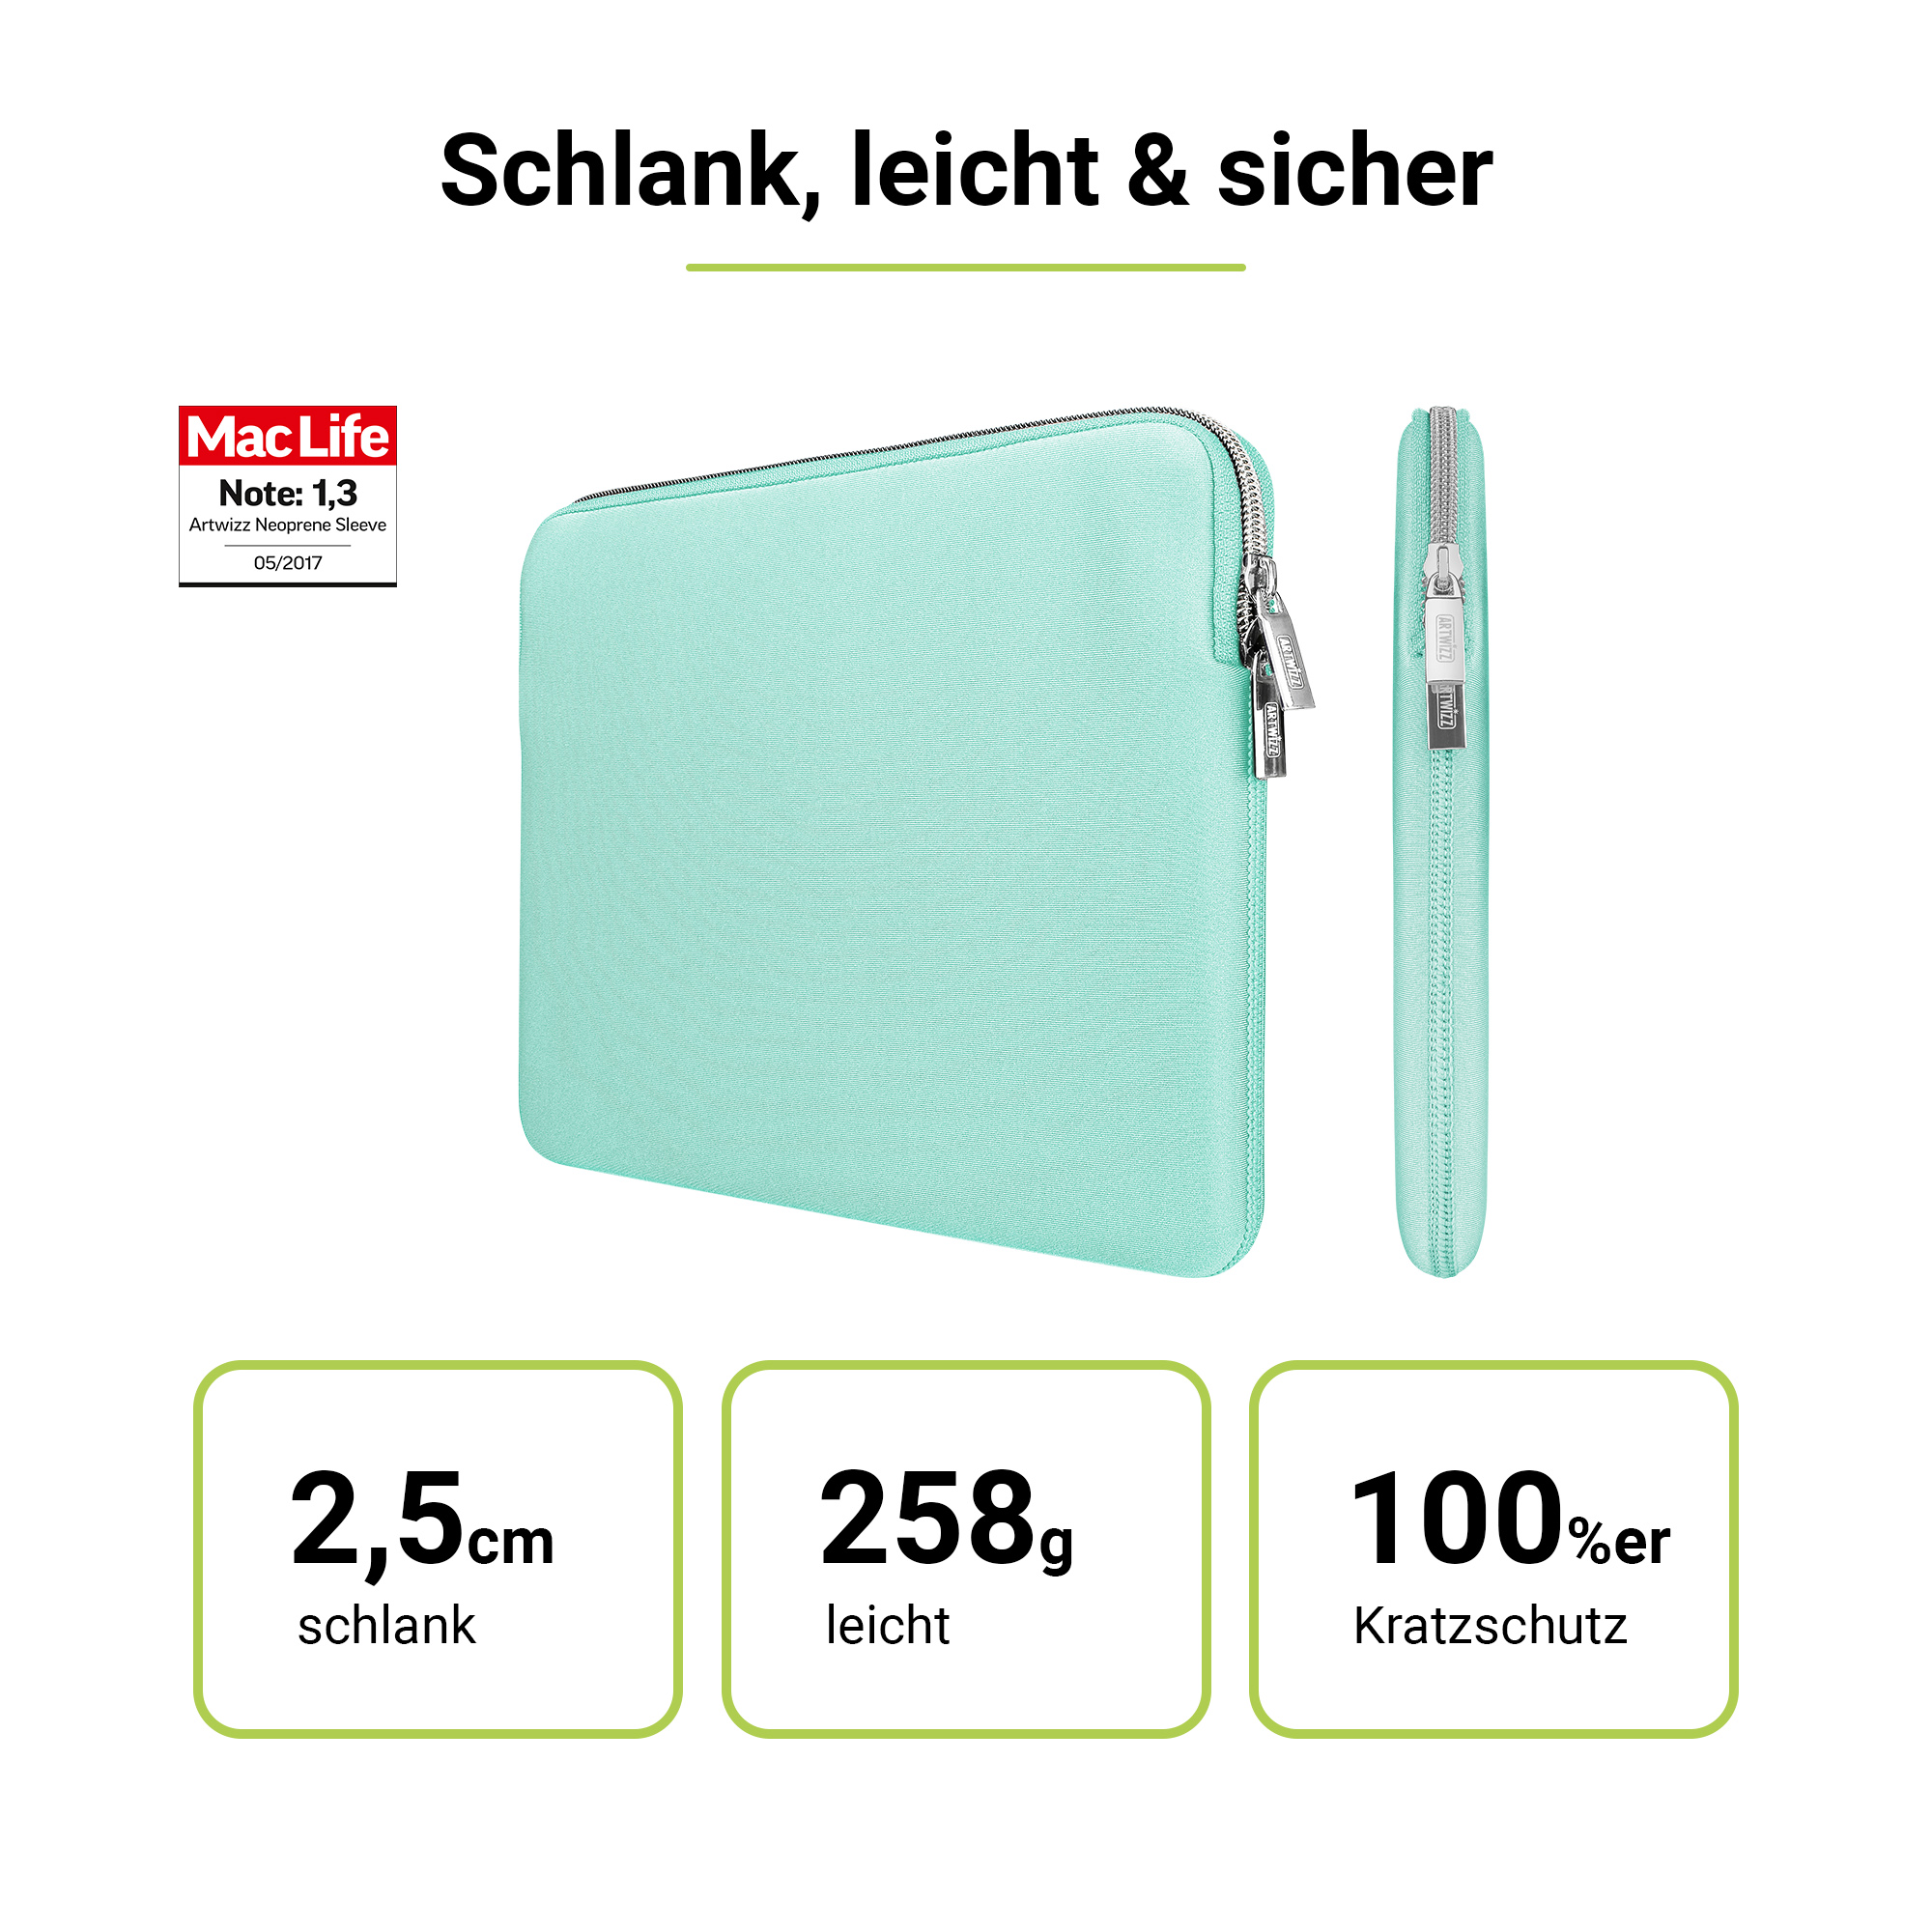 Notebook Sleeve Neoprene ARTWIZZ Tasche Apple für Sleeve Neopren, Grün